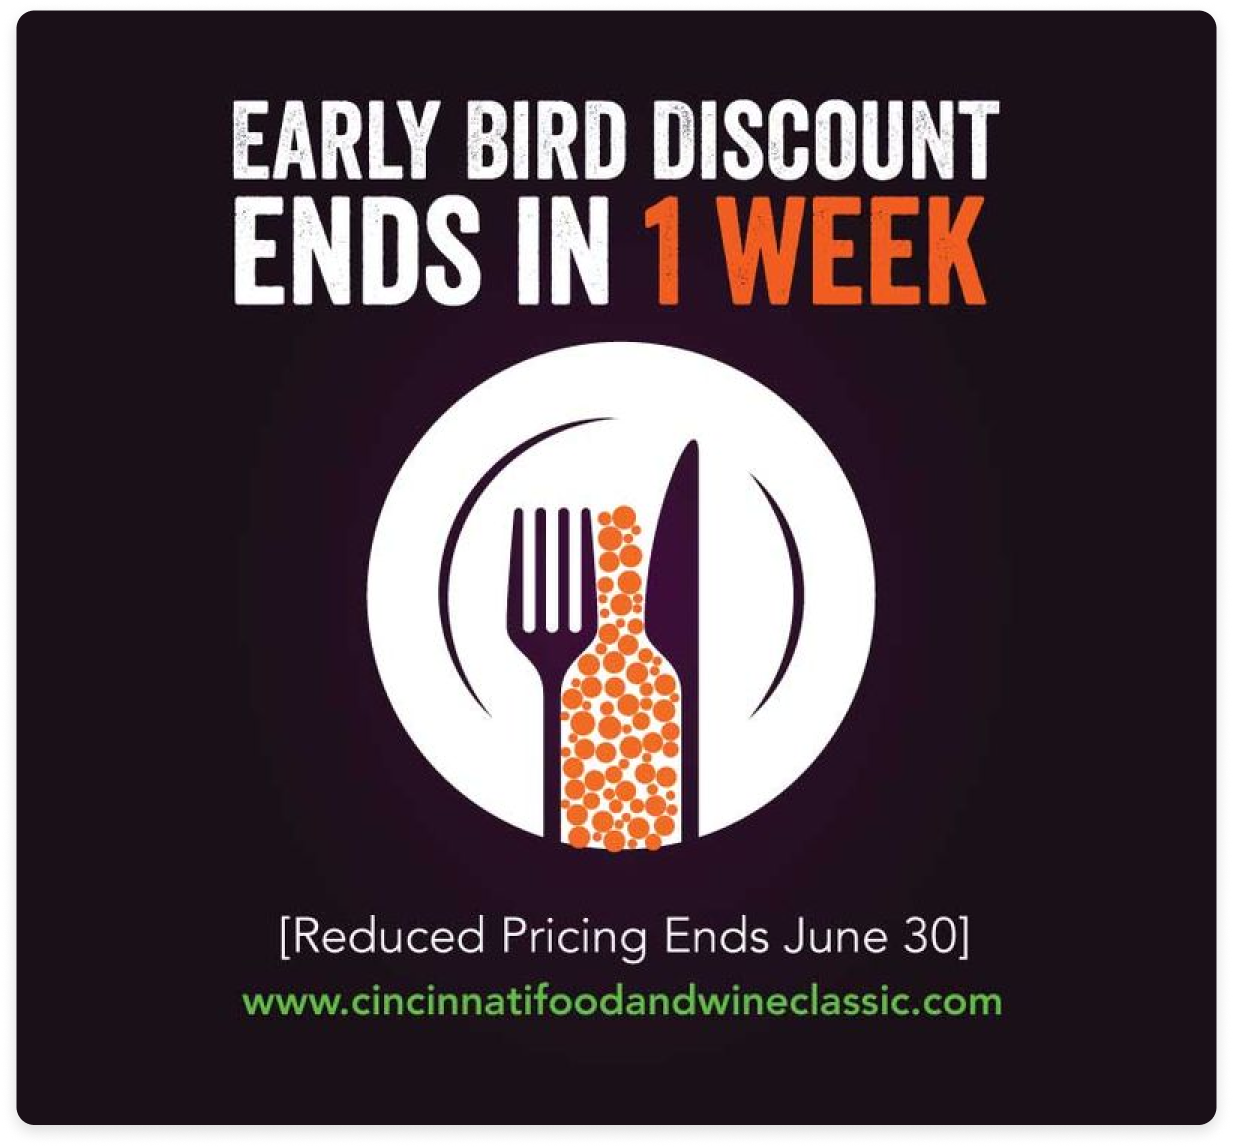 Early bird discounts